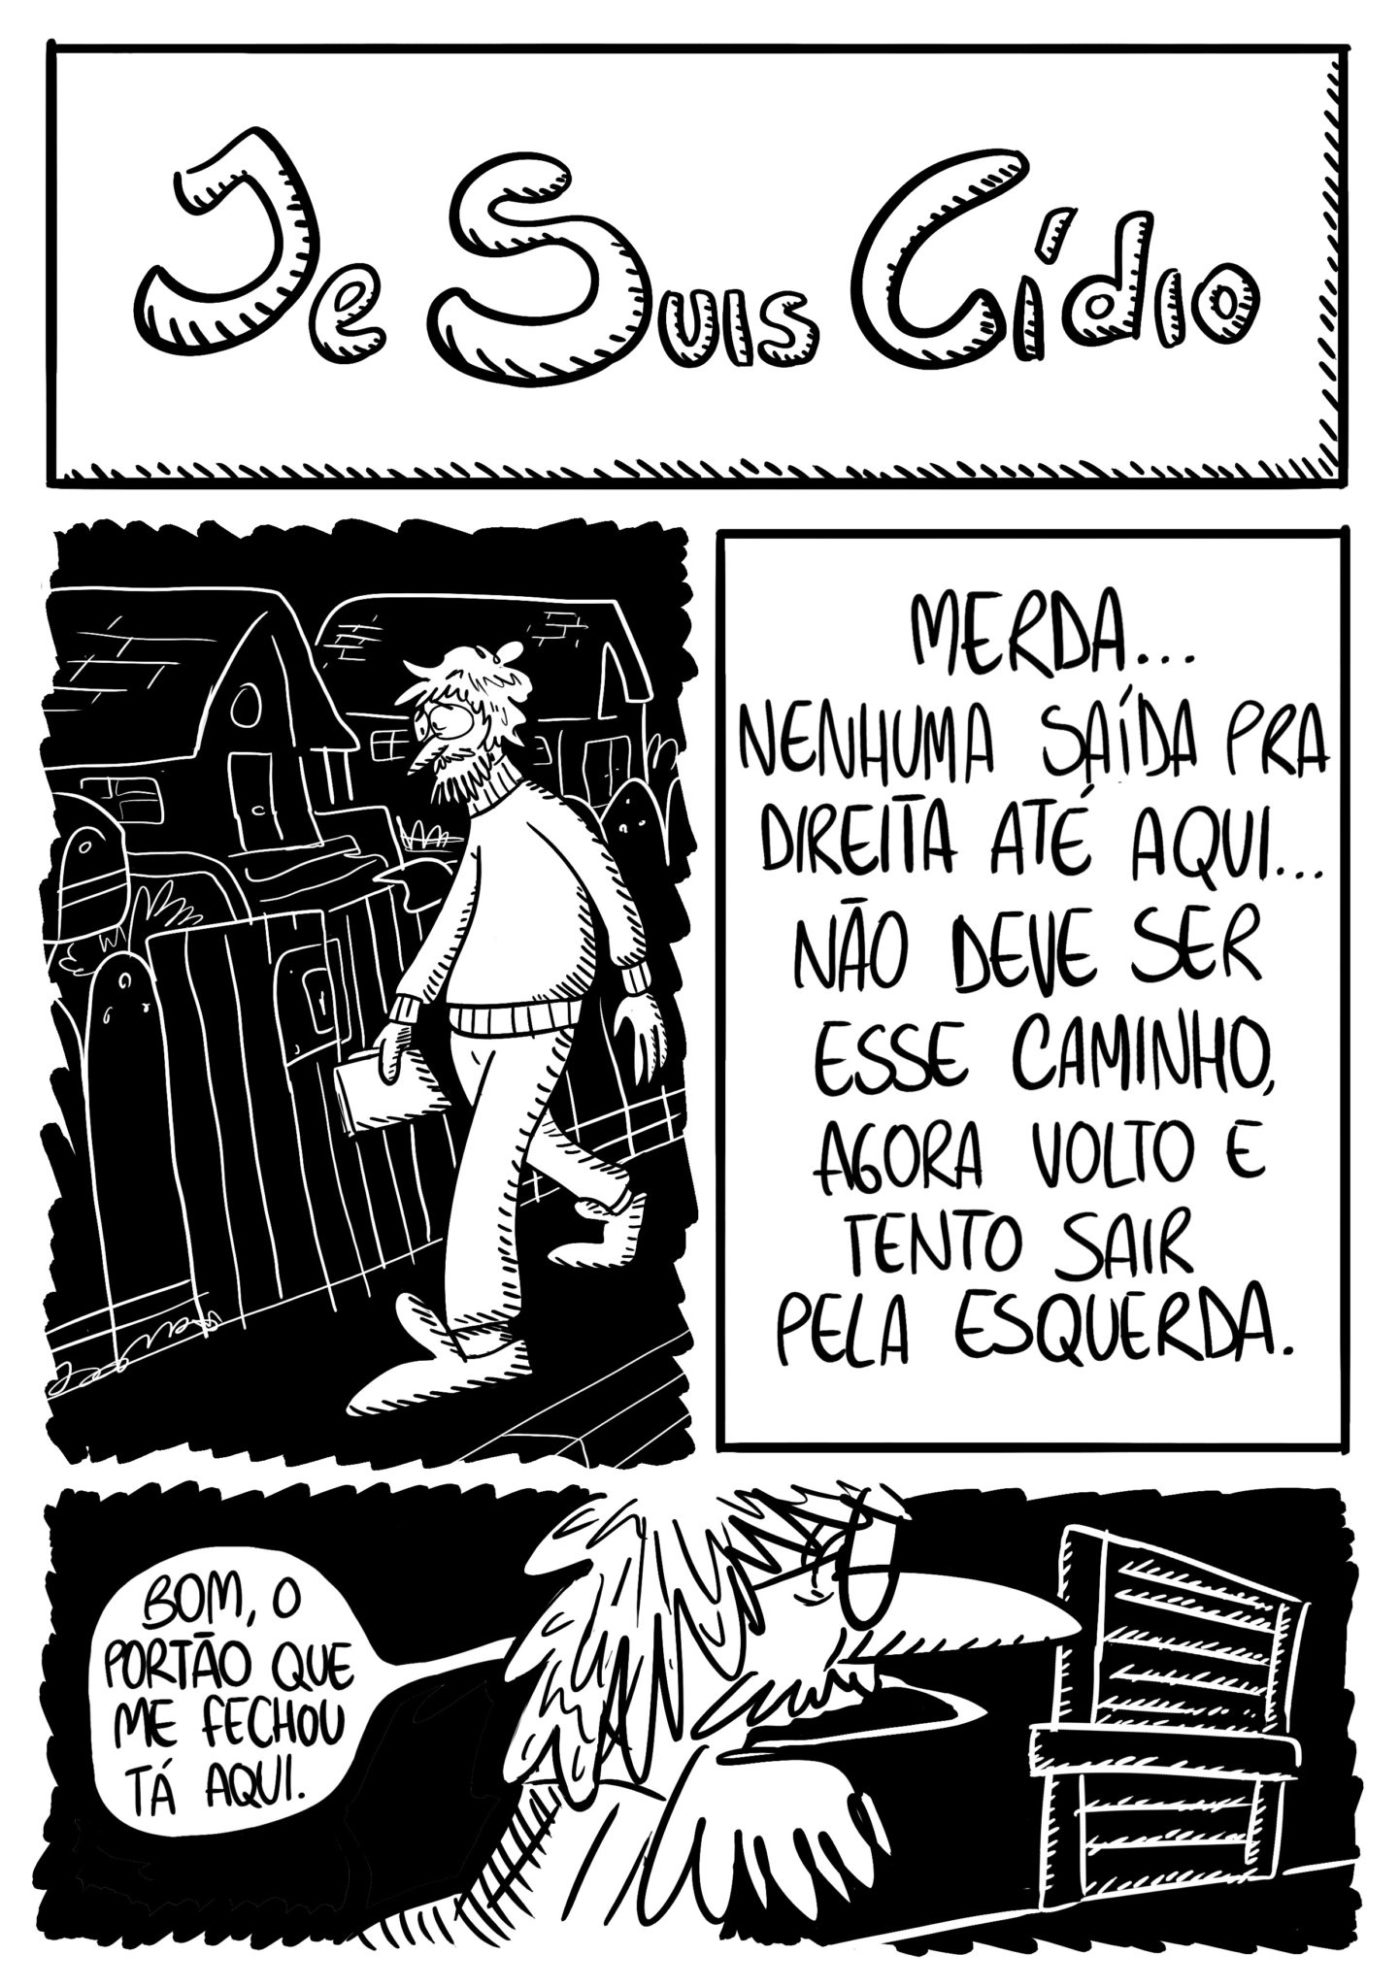 Je Suis Cídio #8, por João B. Godoi